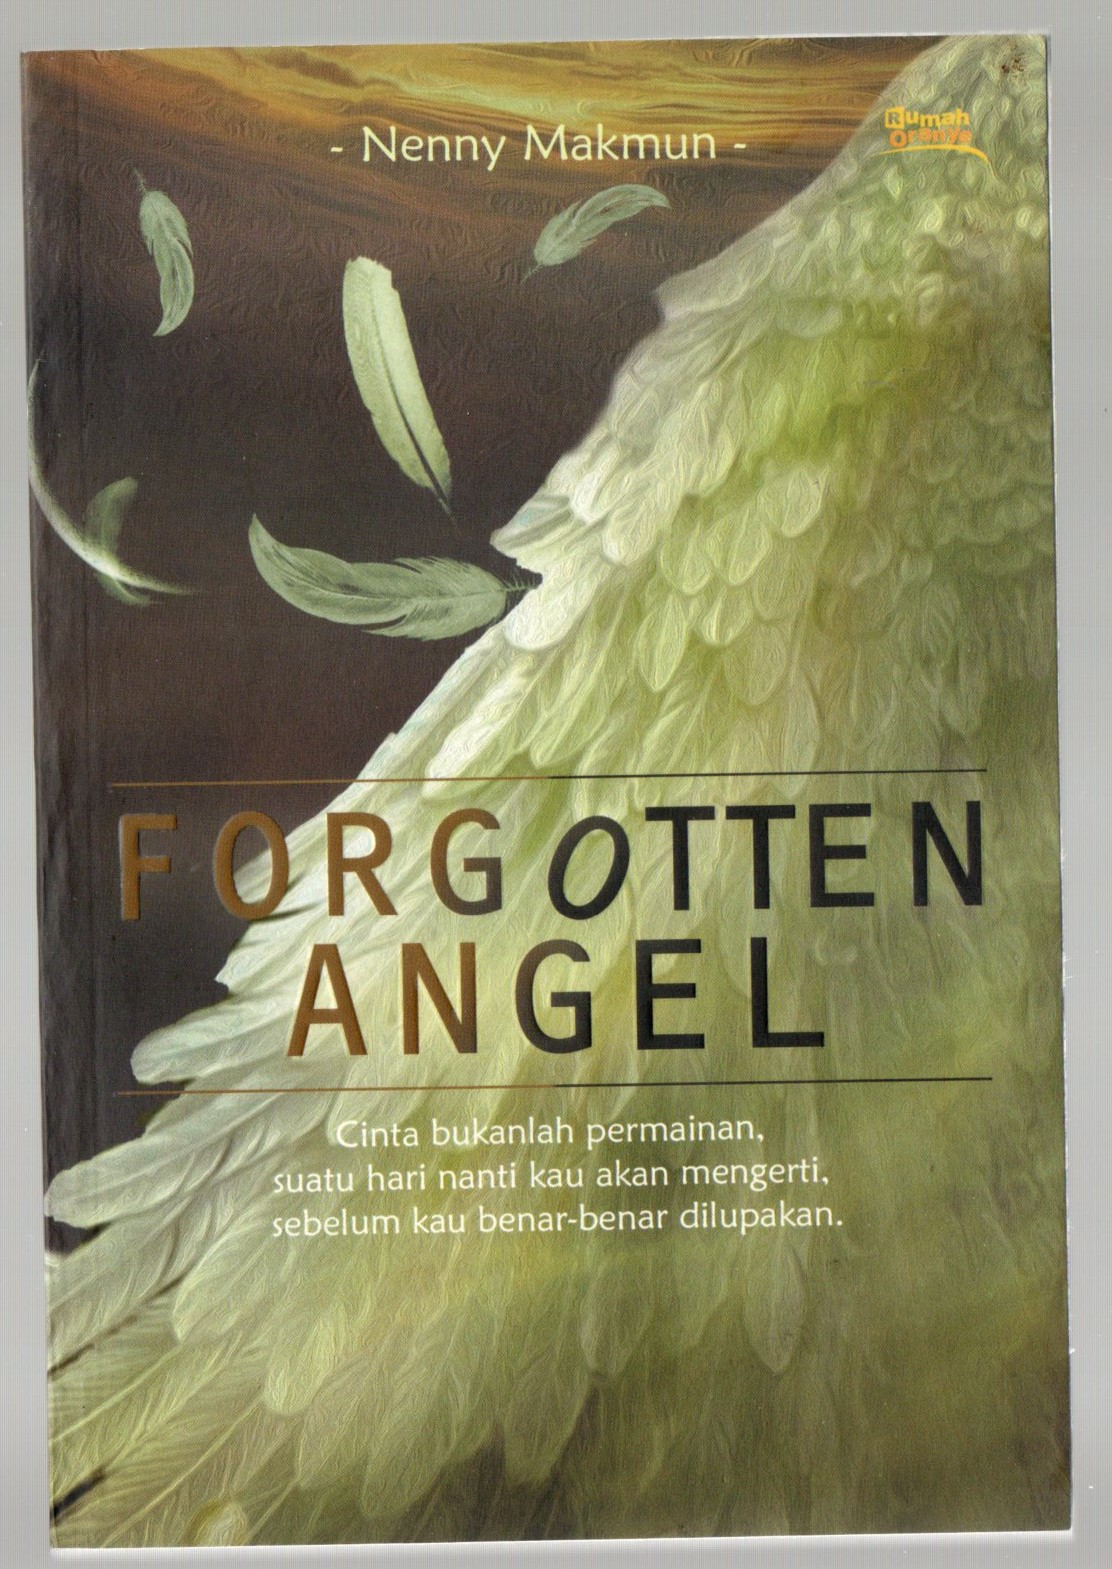 Forgotten angel